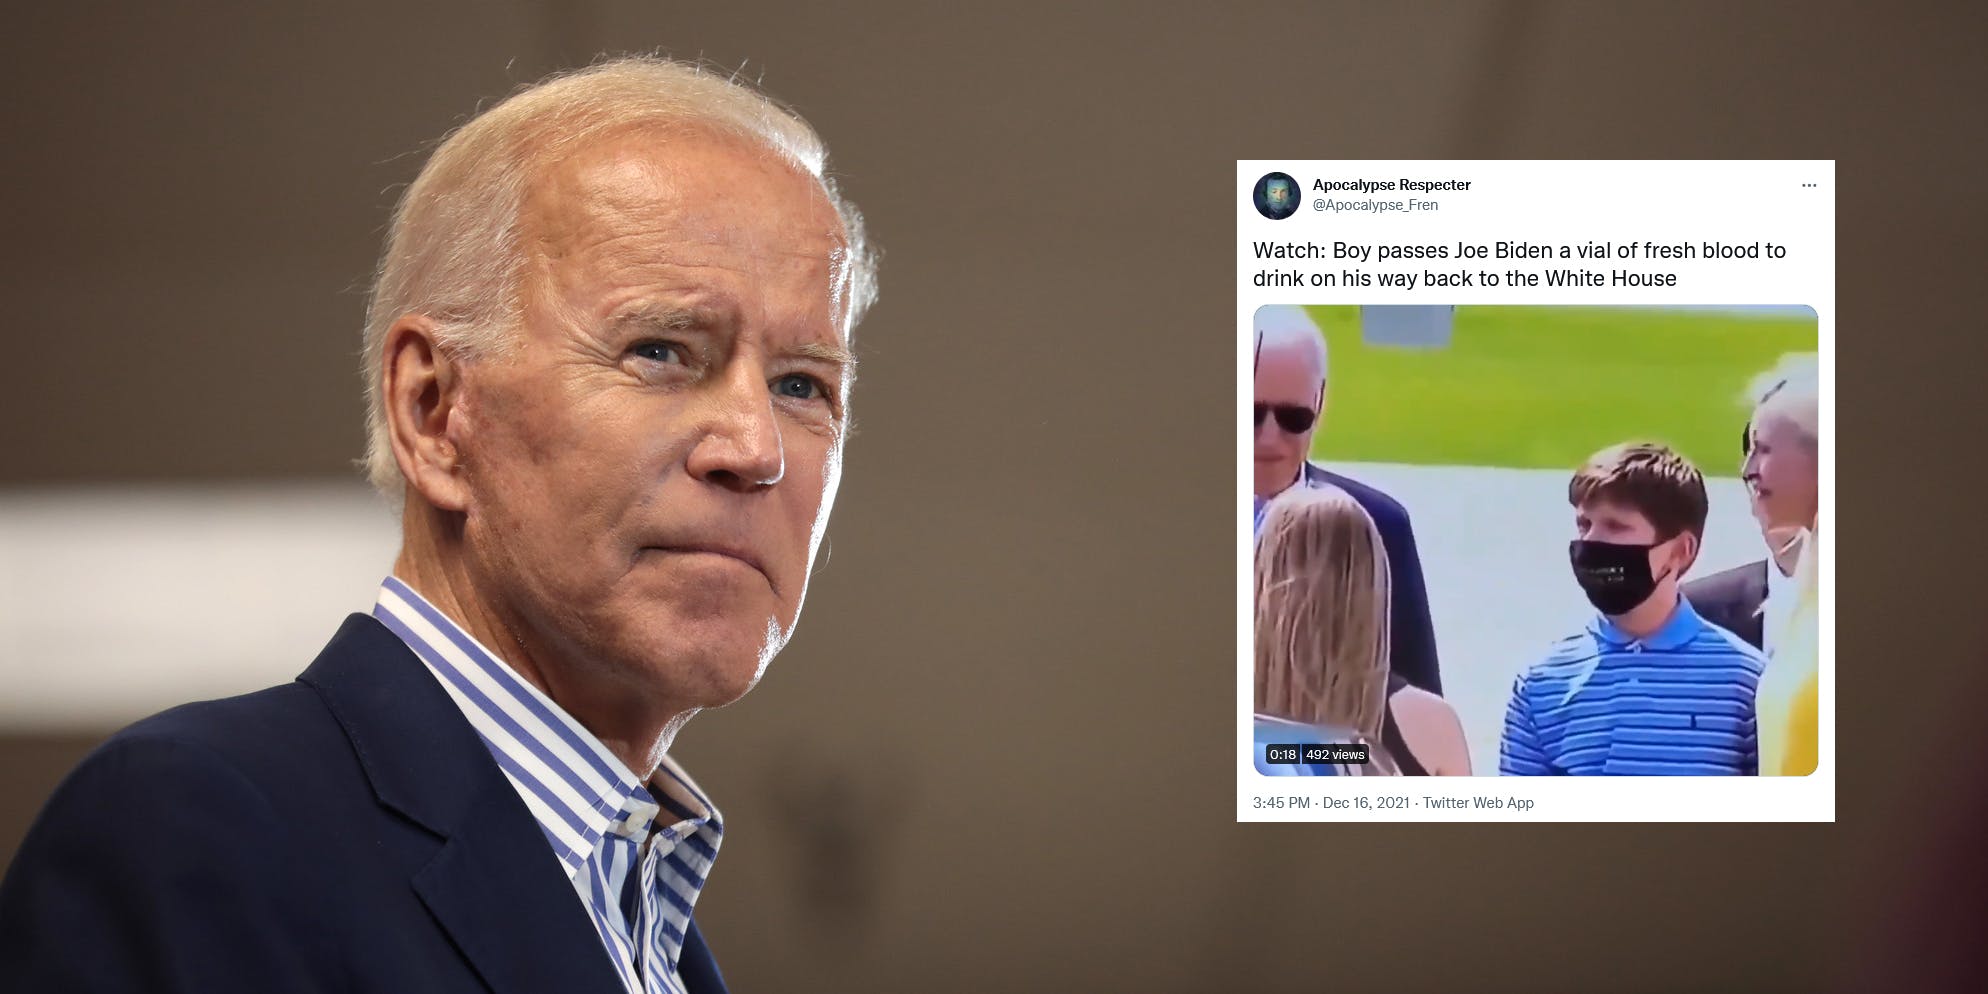 Joe Biden next to a tweet accusing a boy of giving him a 'vial of fresh blood.'